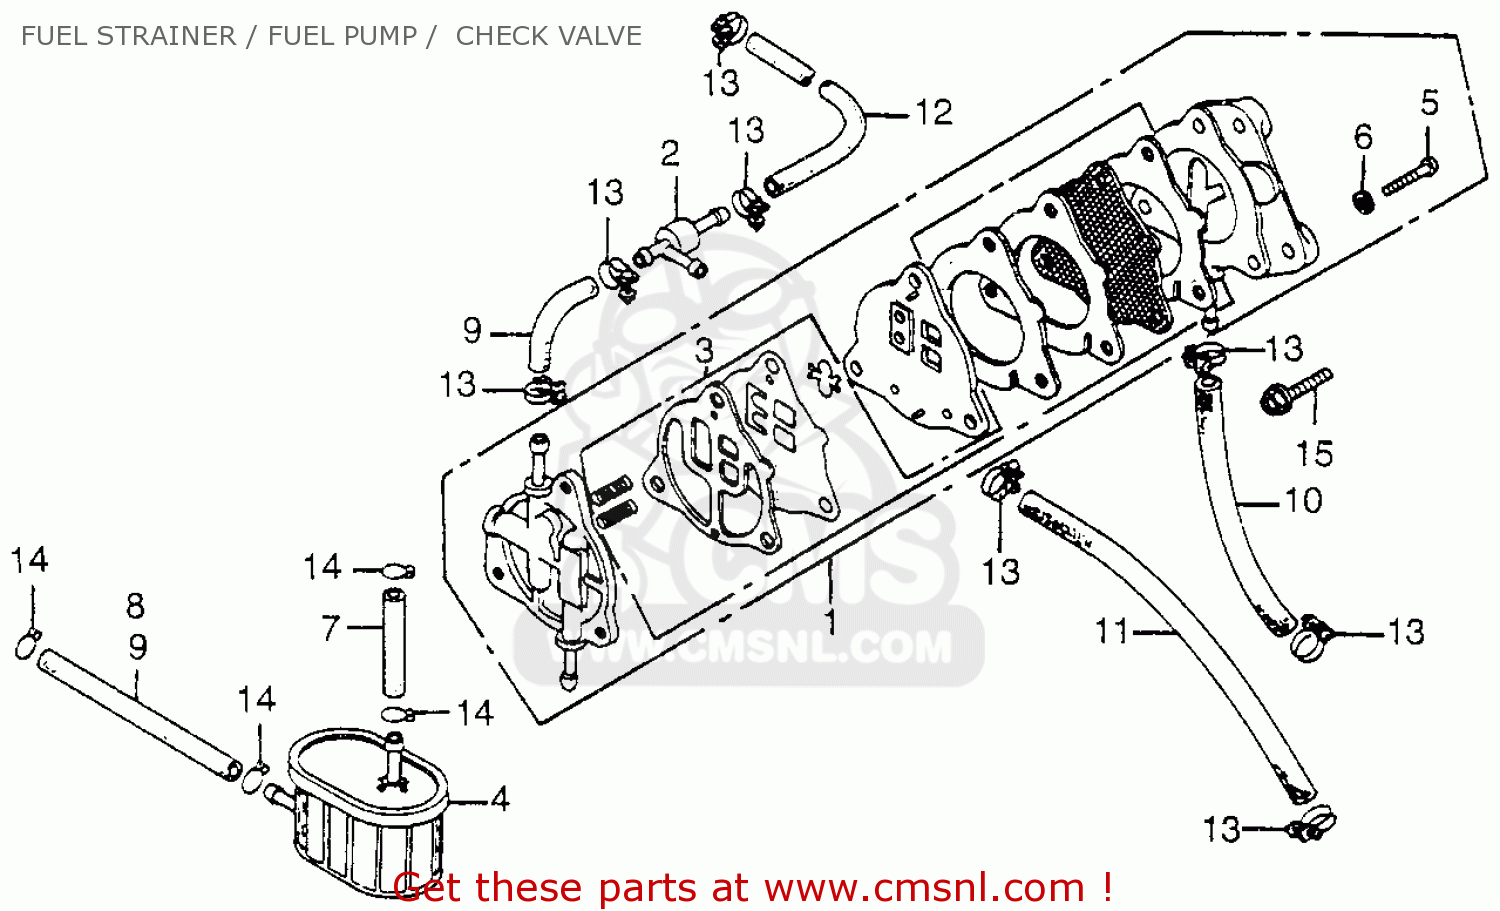 Wiring Diagram PDF: 2003 Honda Rubicon Ignition Wiring Diagram